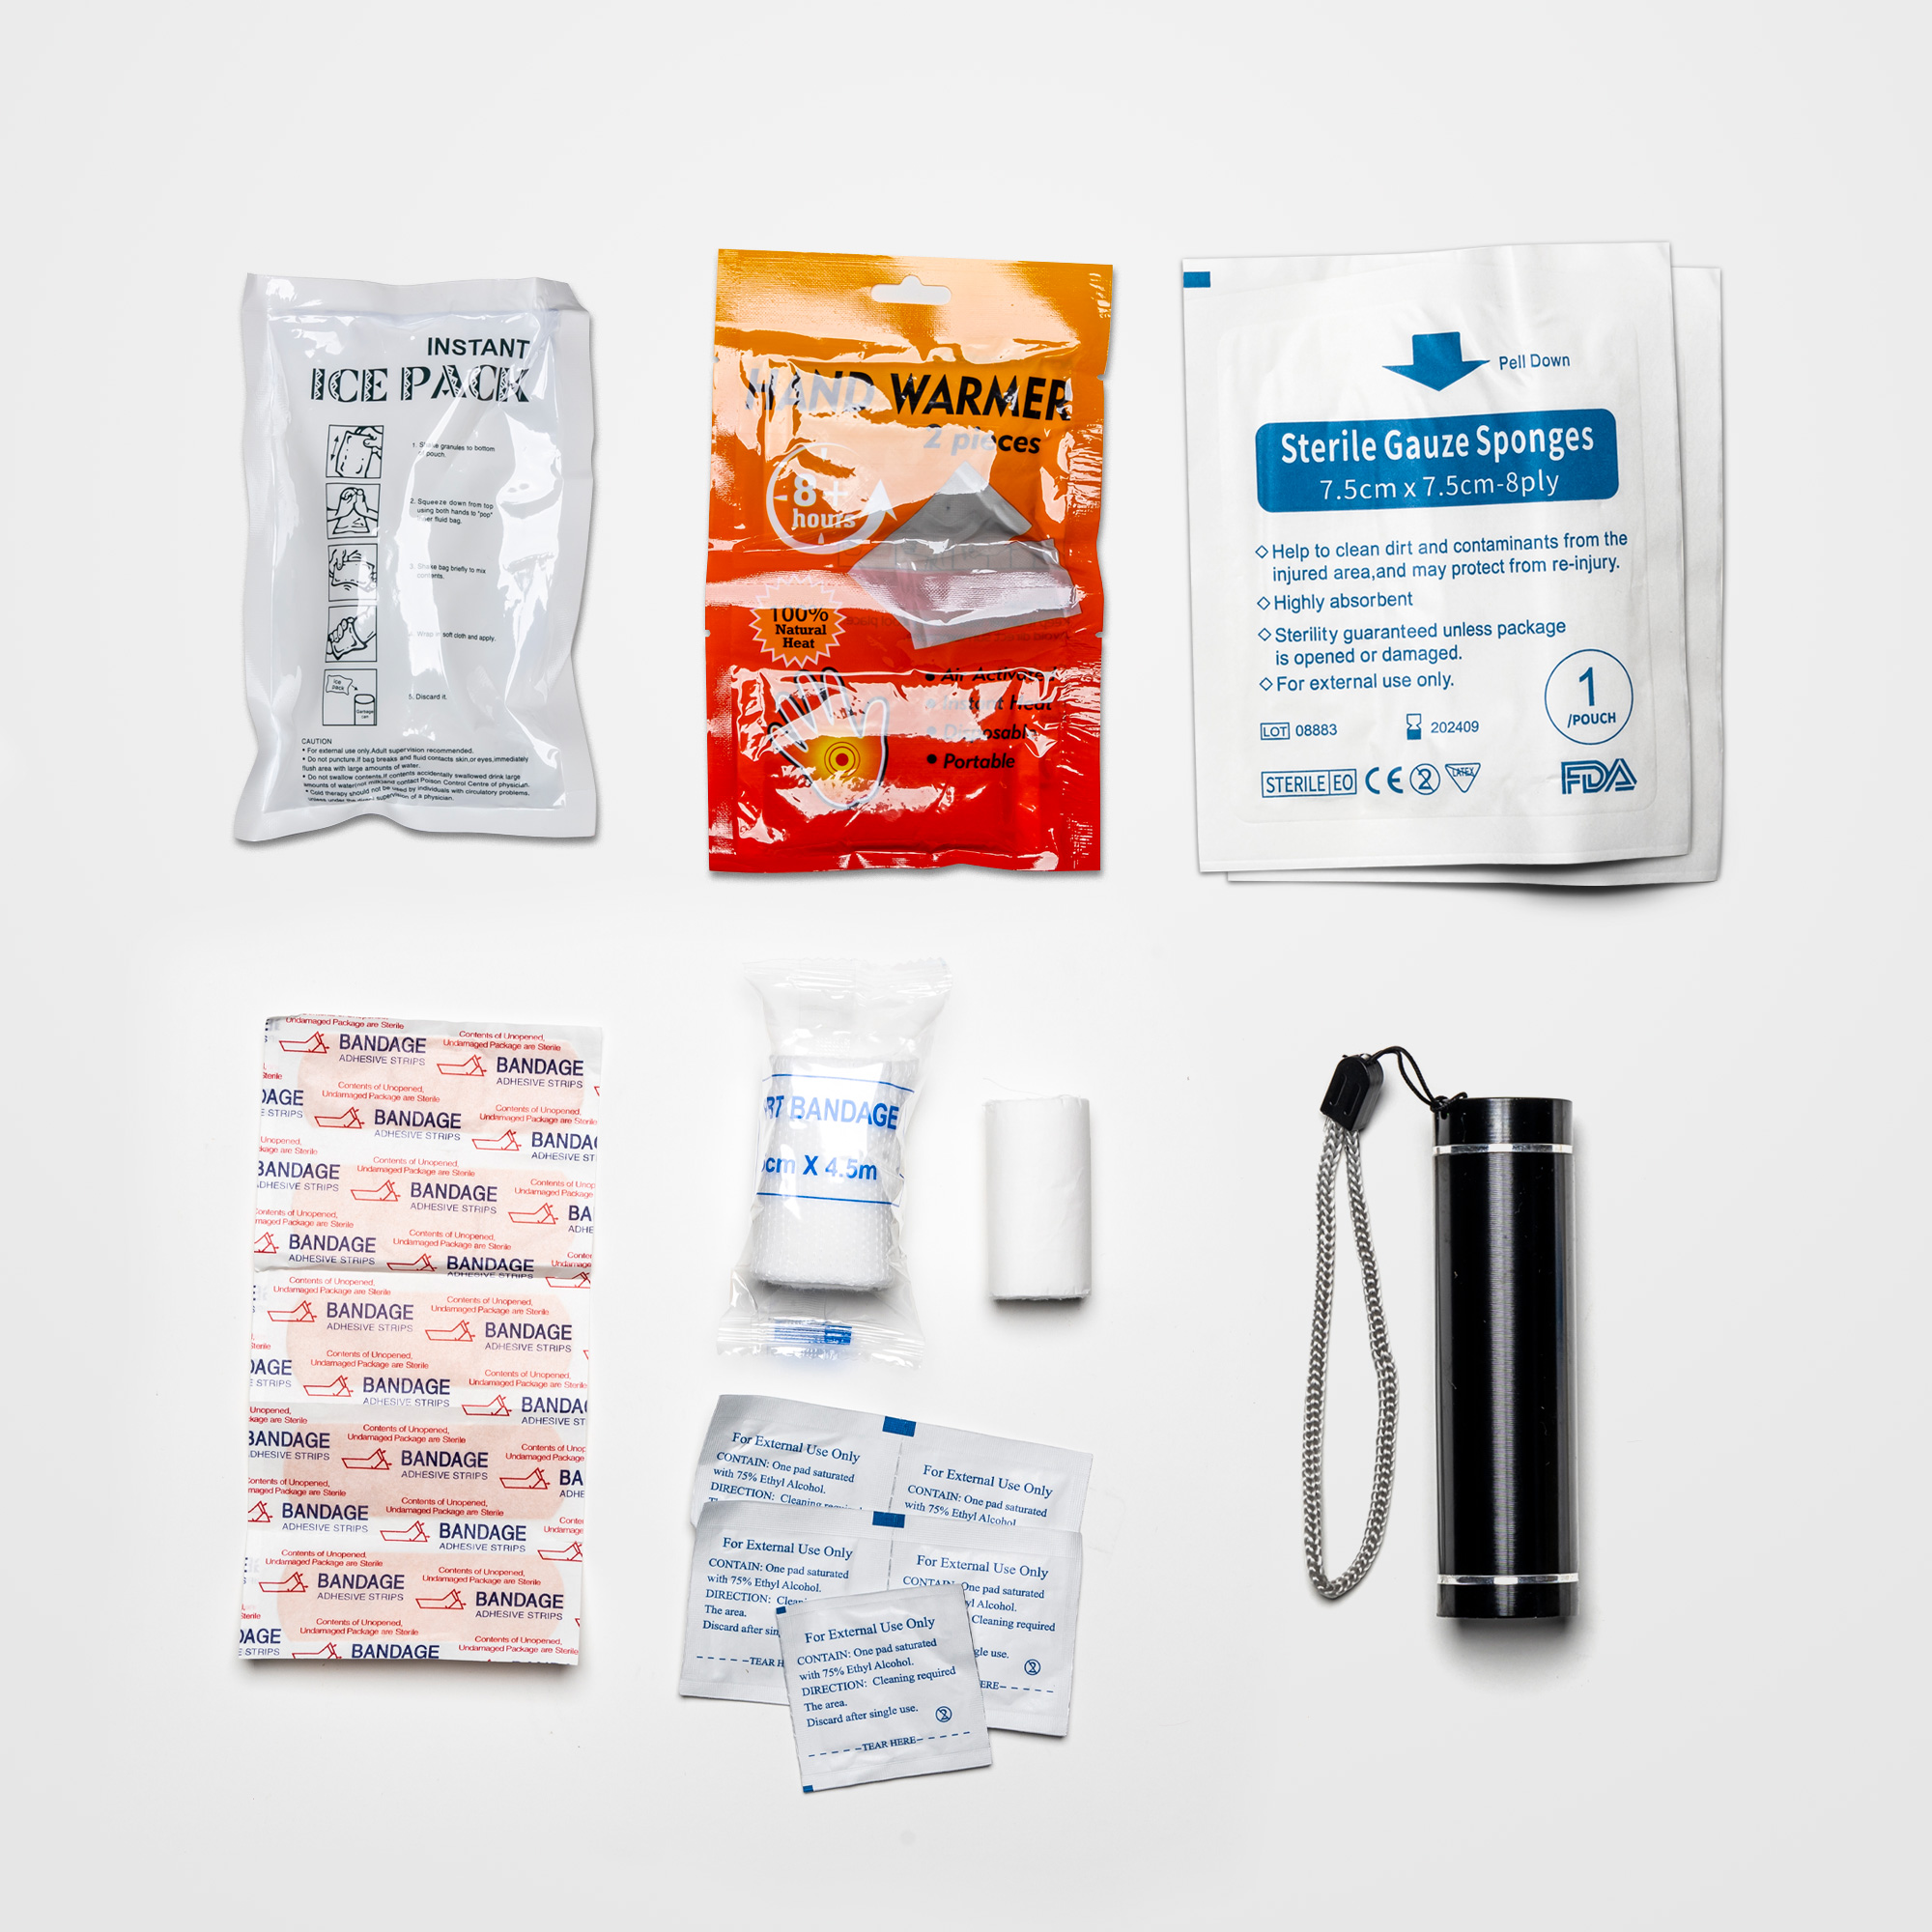 EWFA-S   Emergency Kit (small)